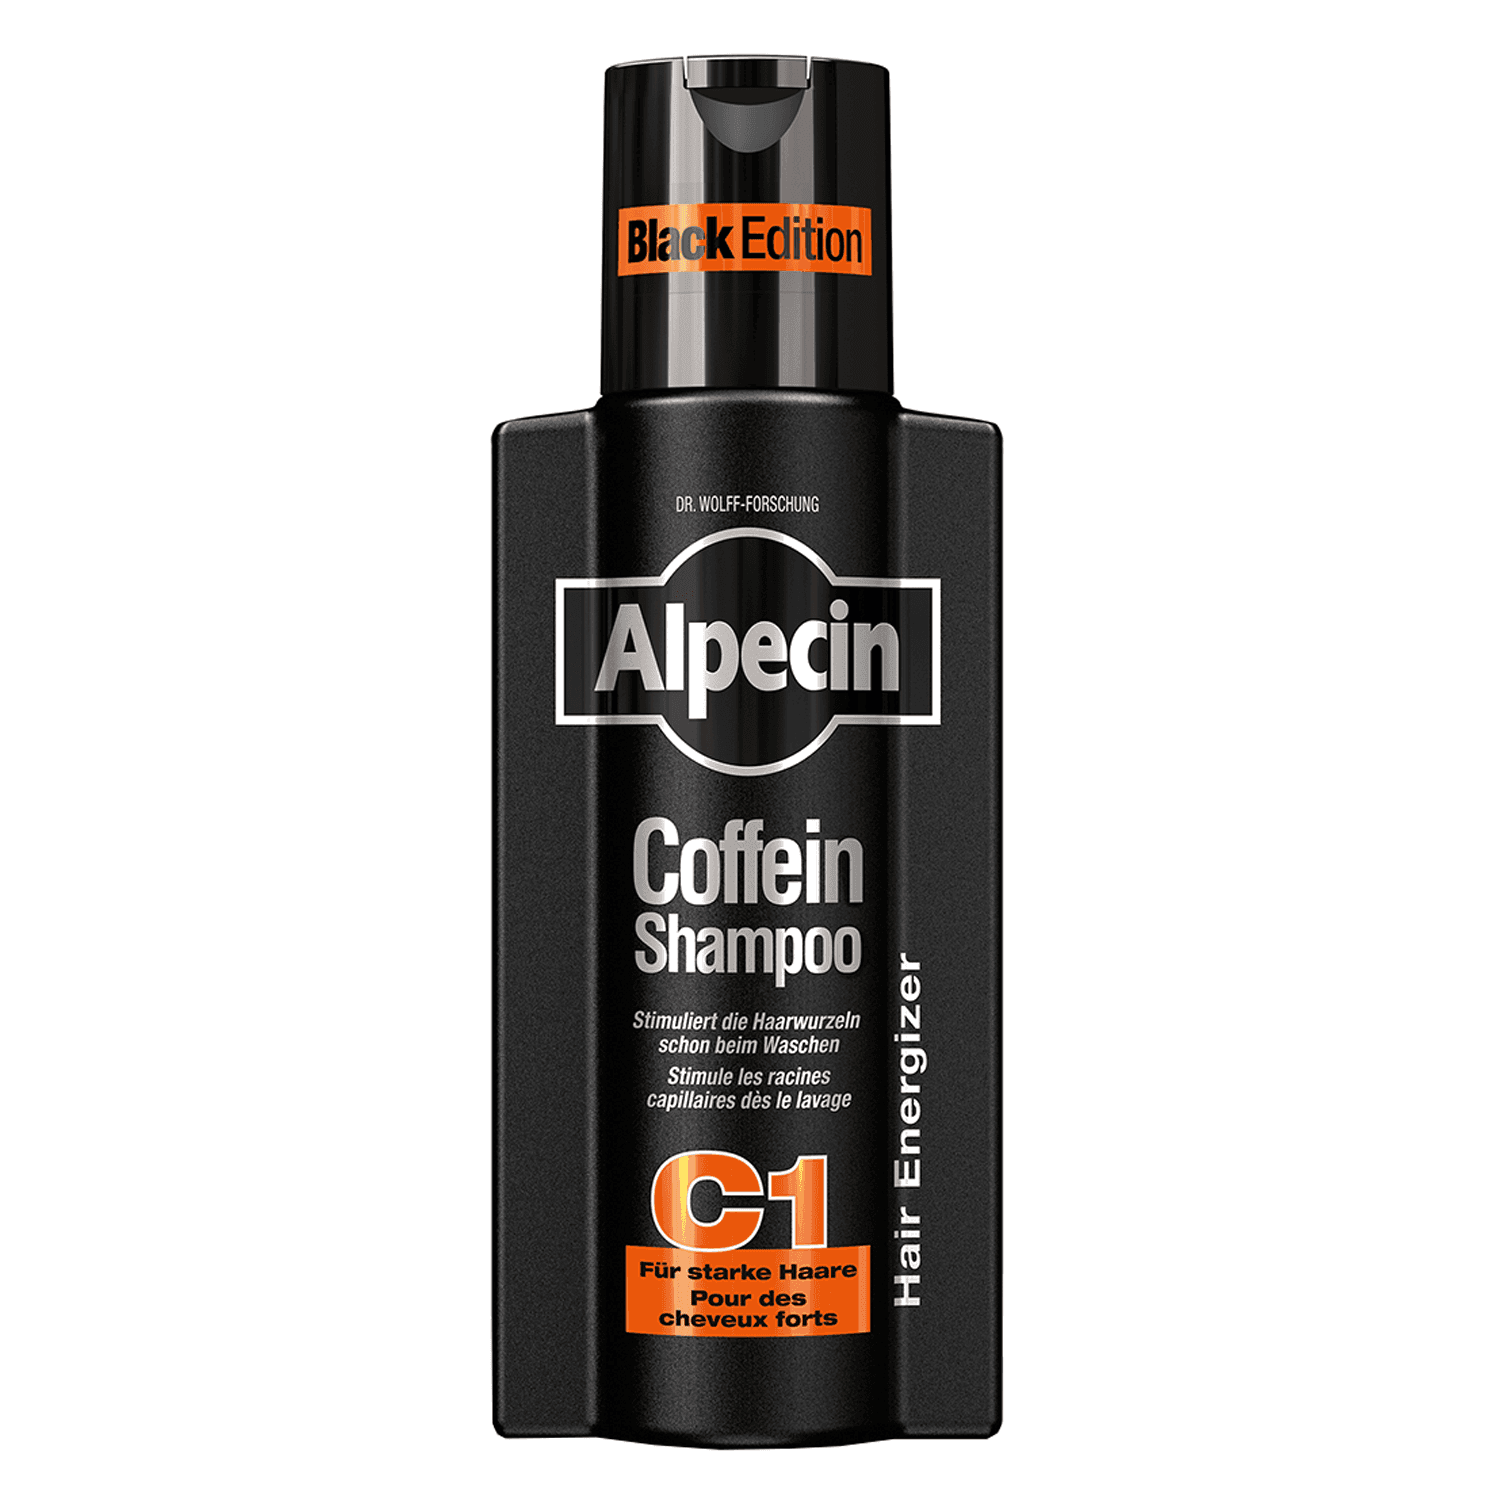 Alpecin - Coffein-Shampoo C1 Black Edition